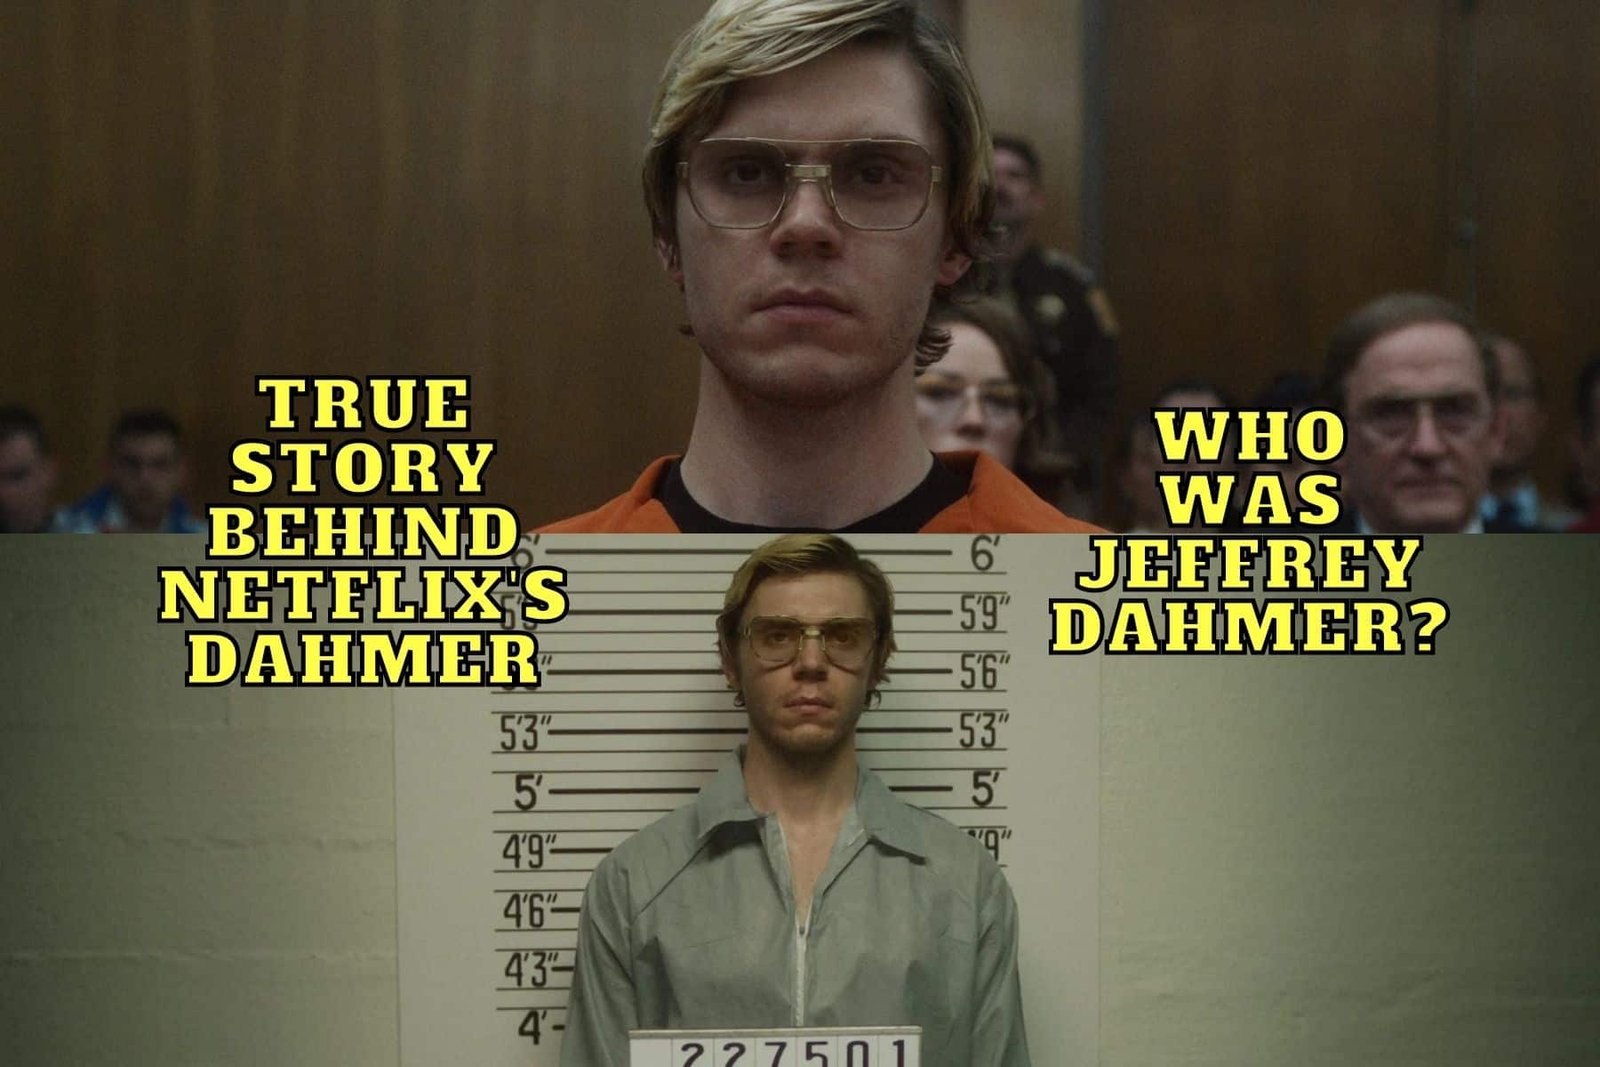 True Story Behind Netflix’s DAHMER! - Who was Jeffrey Dahmer?